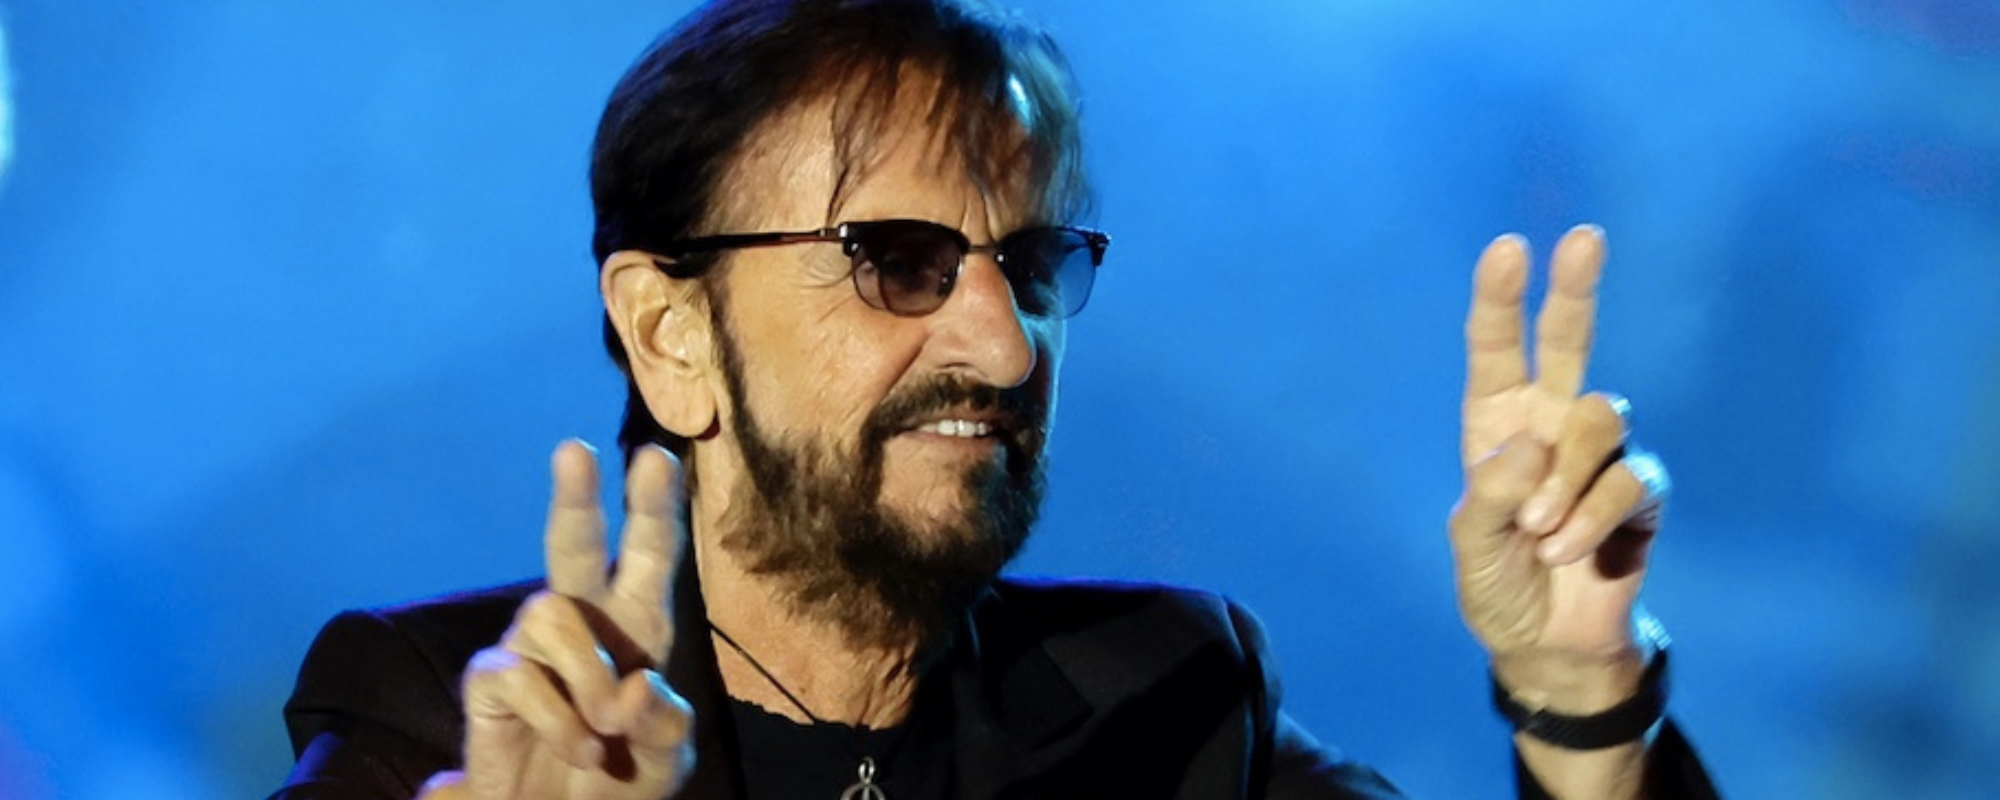 Ringo Starr Working on a New Album